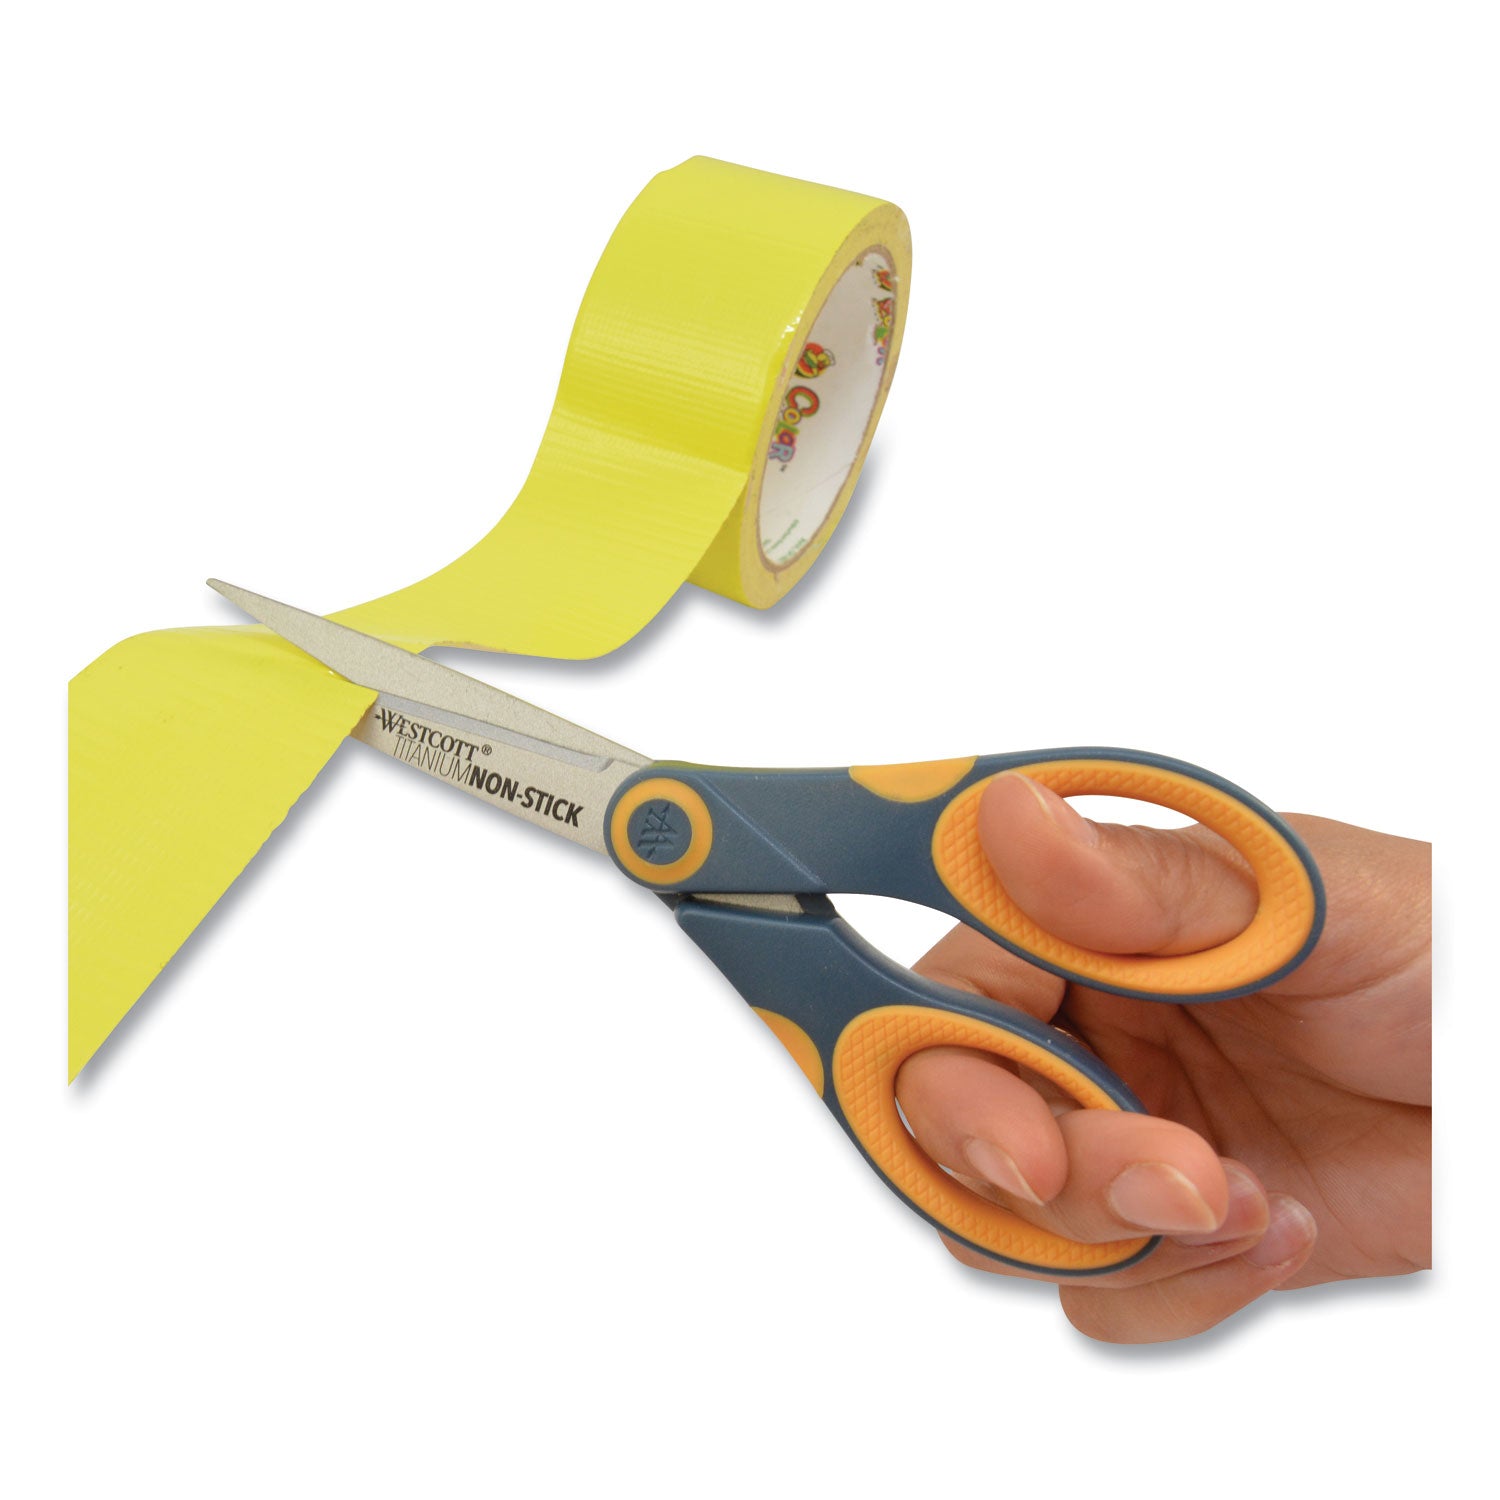 Non-Stick Titanium Bonded Scissors, 7" Long, 3" Cut Length, Gray/Yellow Straight Handle - 